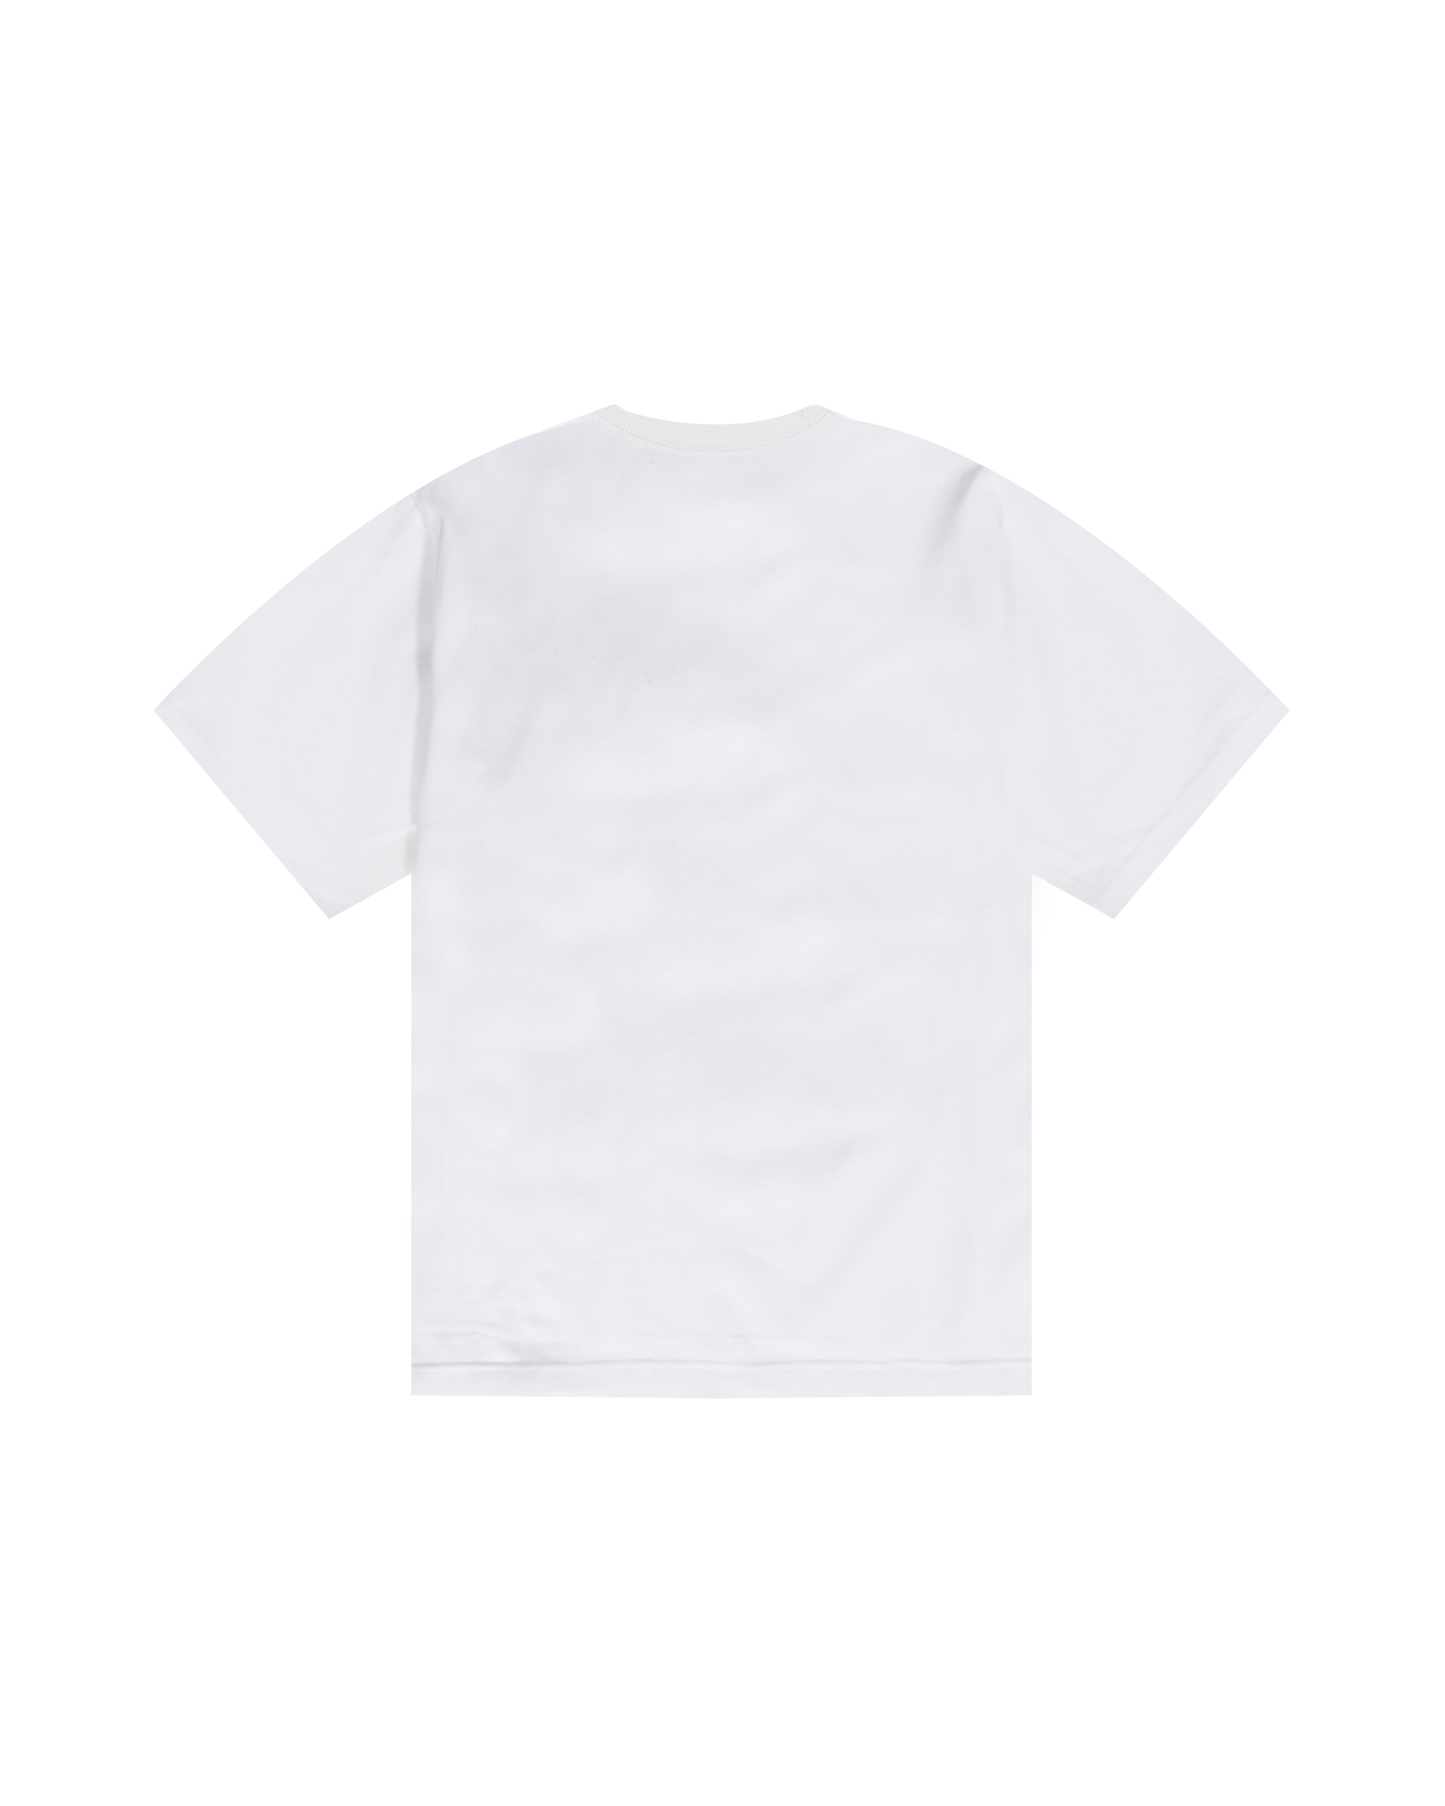 Splat T-Shirt - White